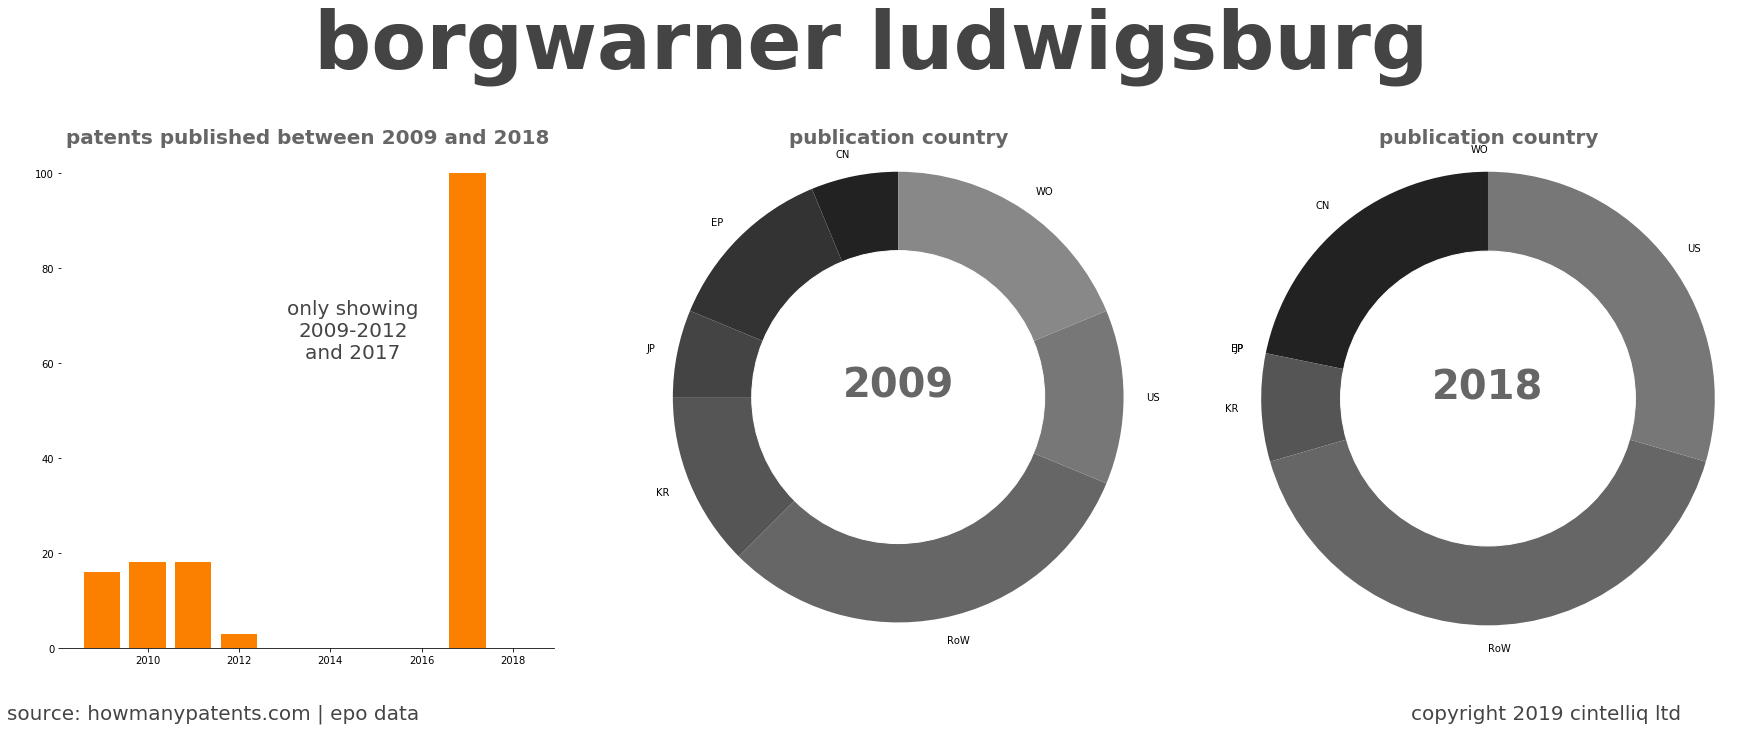 summary of patents for Borgwarner Ludwigsburg